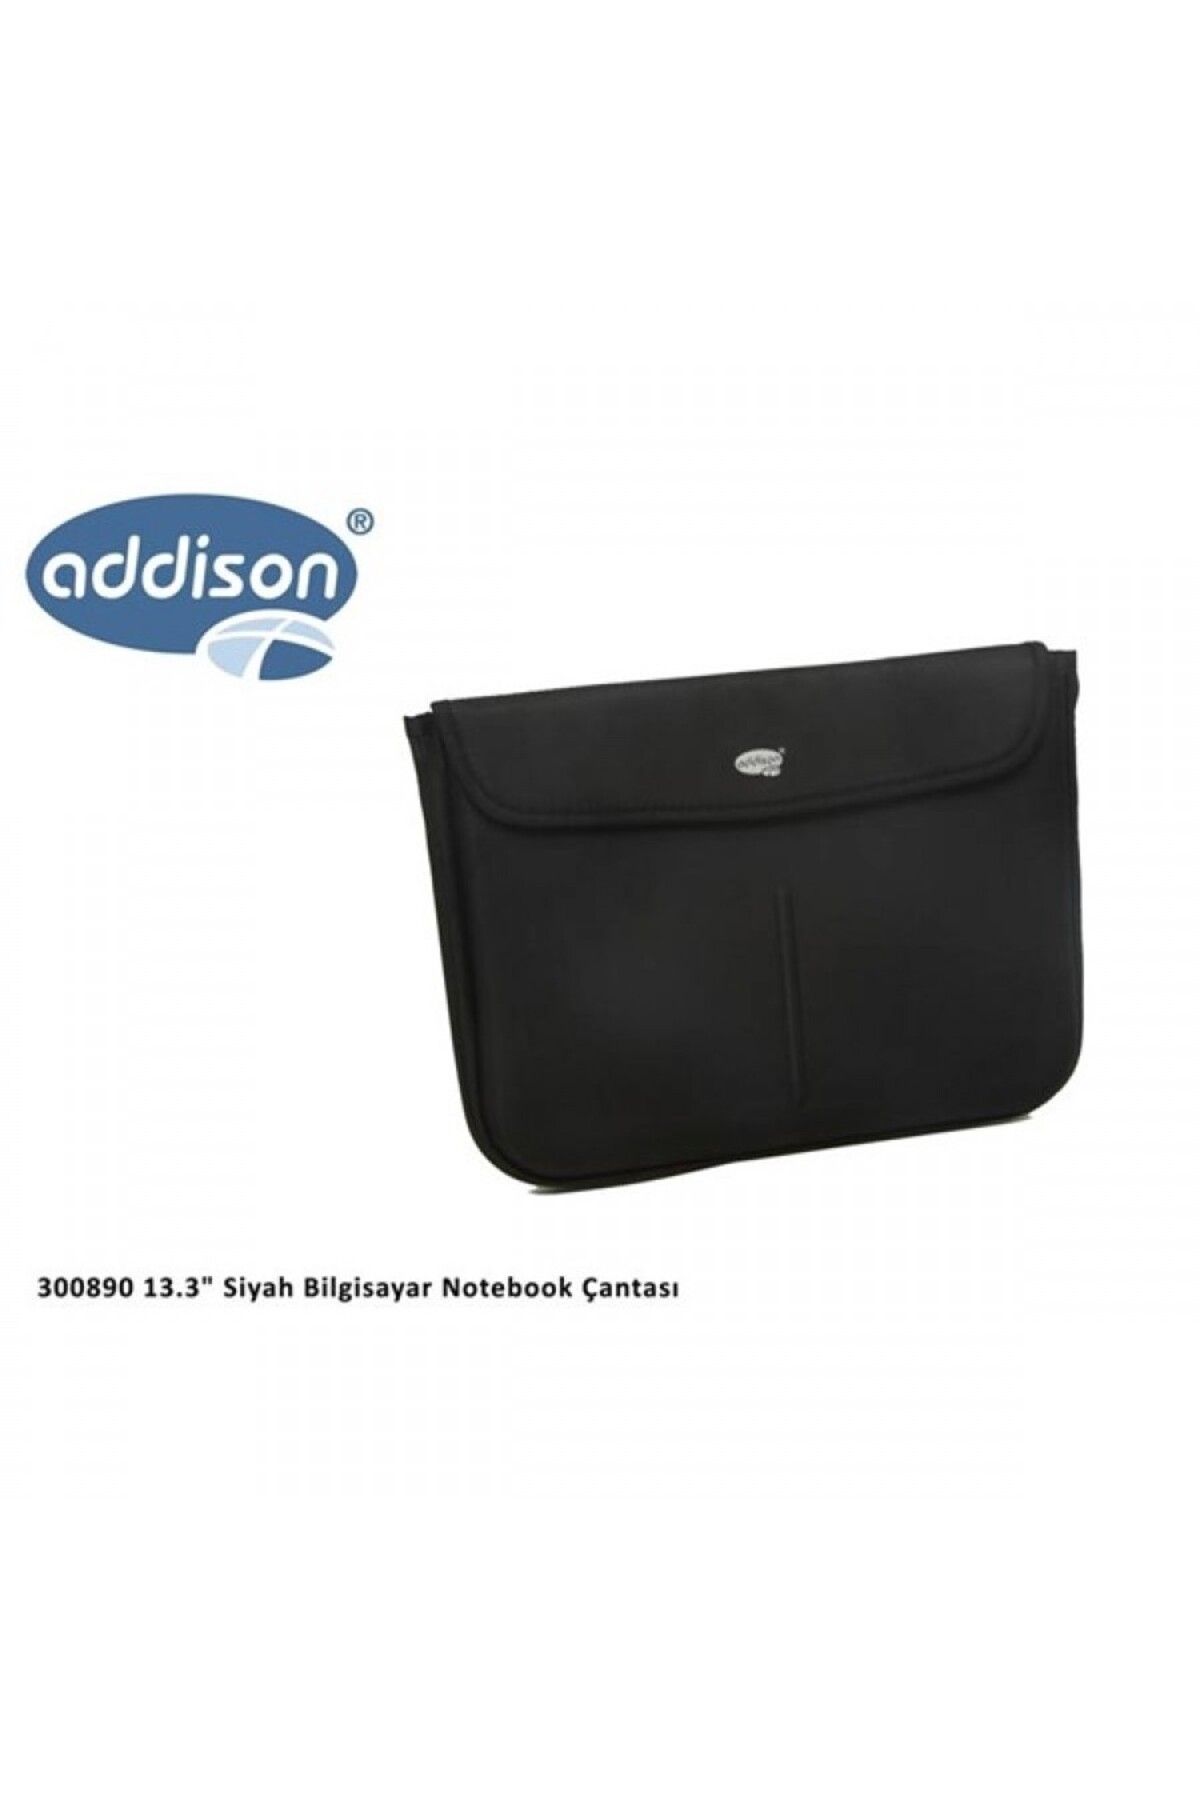 Addison 300890 13" - 14" Siyah Notebook Çantası